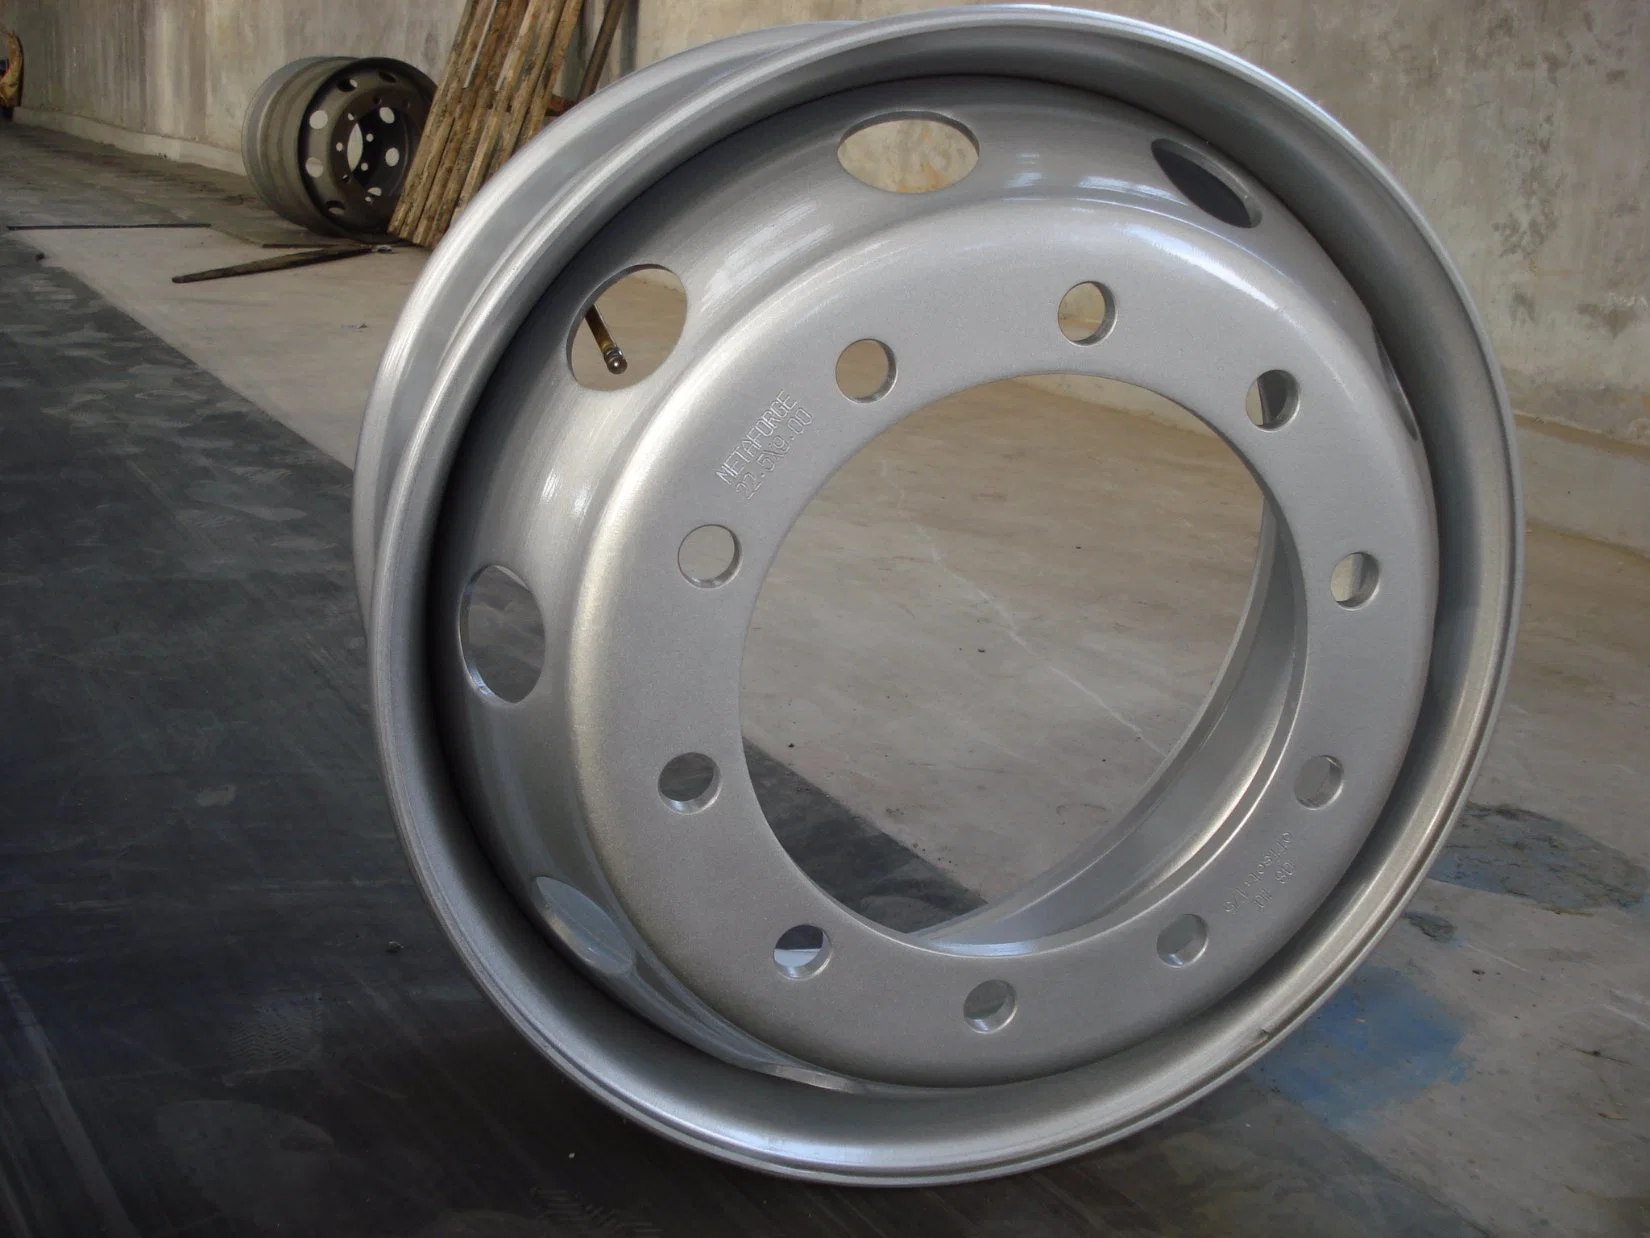 Steel Wheel Rims 22.5X8.25 for Tyre 11r22.5 Auto Steel Rims